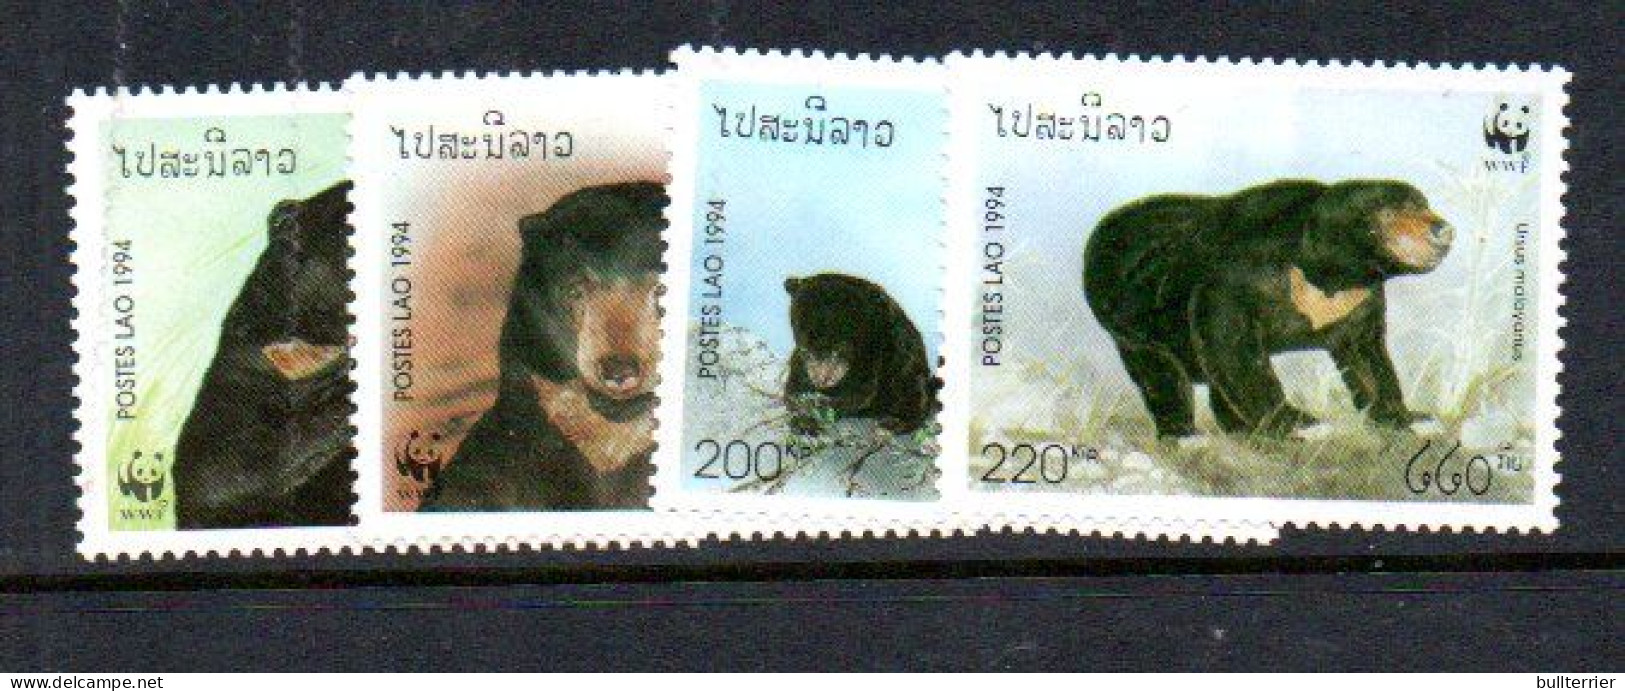 LAOS -  1994- WWF  - MALAY BEAR SET OF 4  MINT NEVER HINGED - Laos